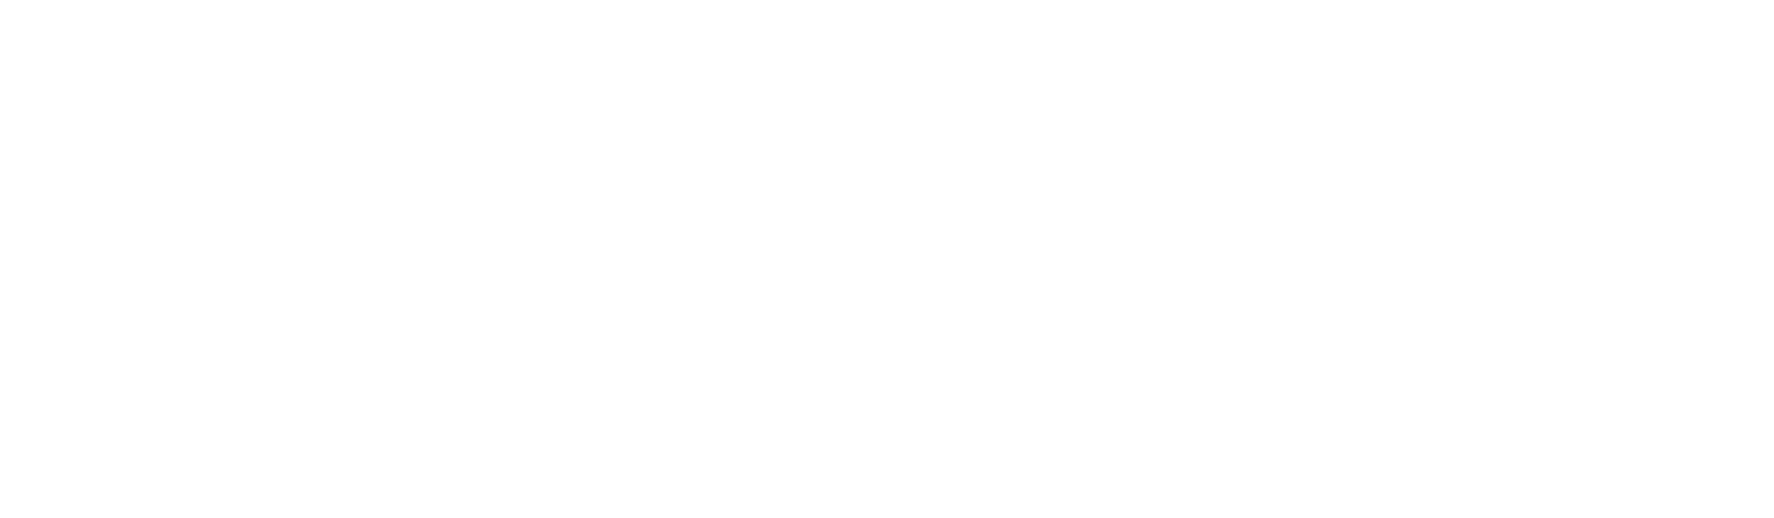 Stockton Style footer logo